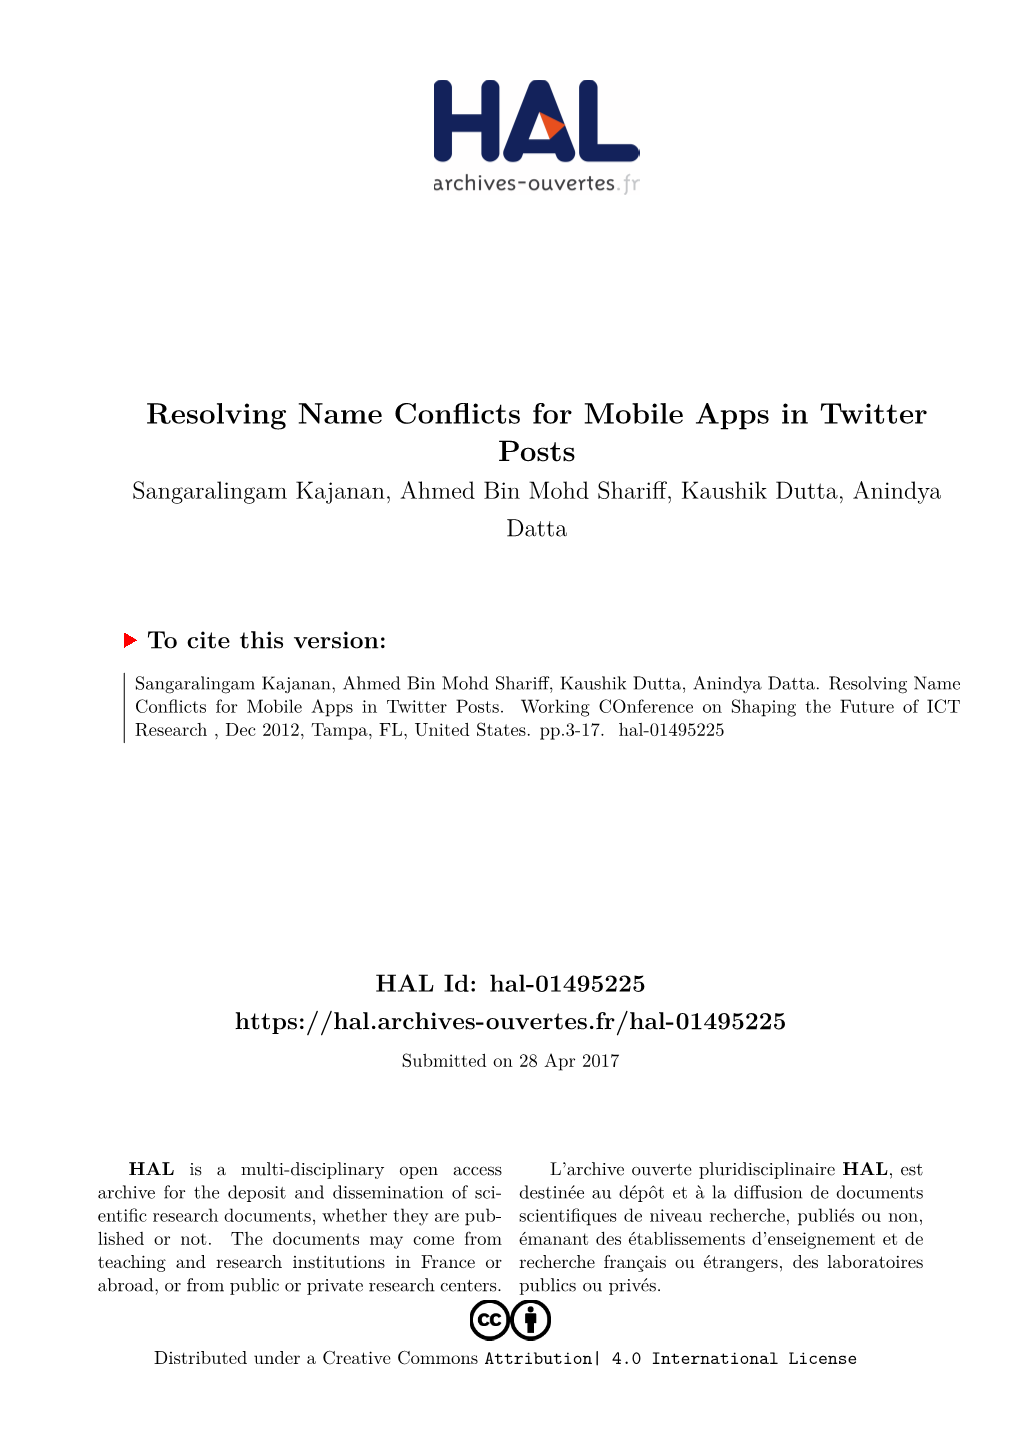 Resolving Name Conflicts for Mobile Apps in Twitter Posts Sangaralingam Kajanan, Ahmed Bin Mohd Shariff, Kaushik Dutta, Anindya Datta